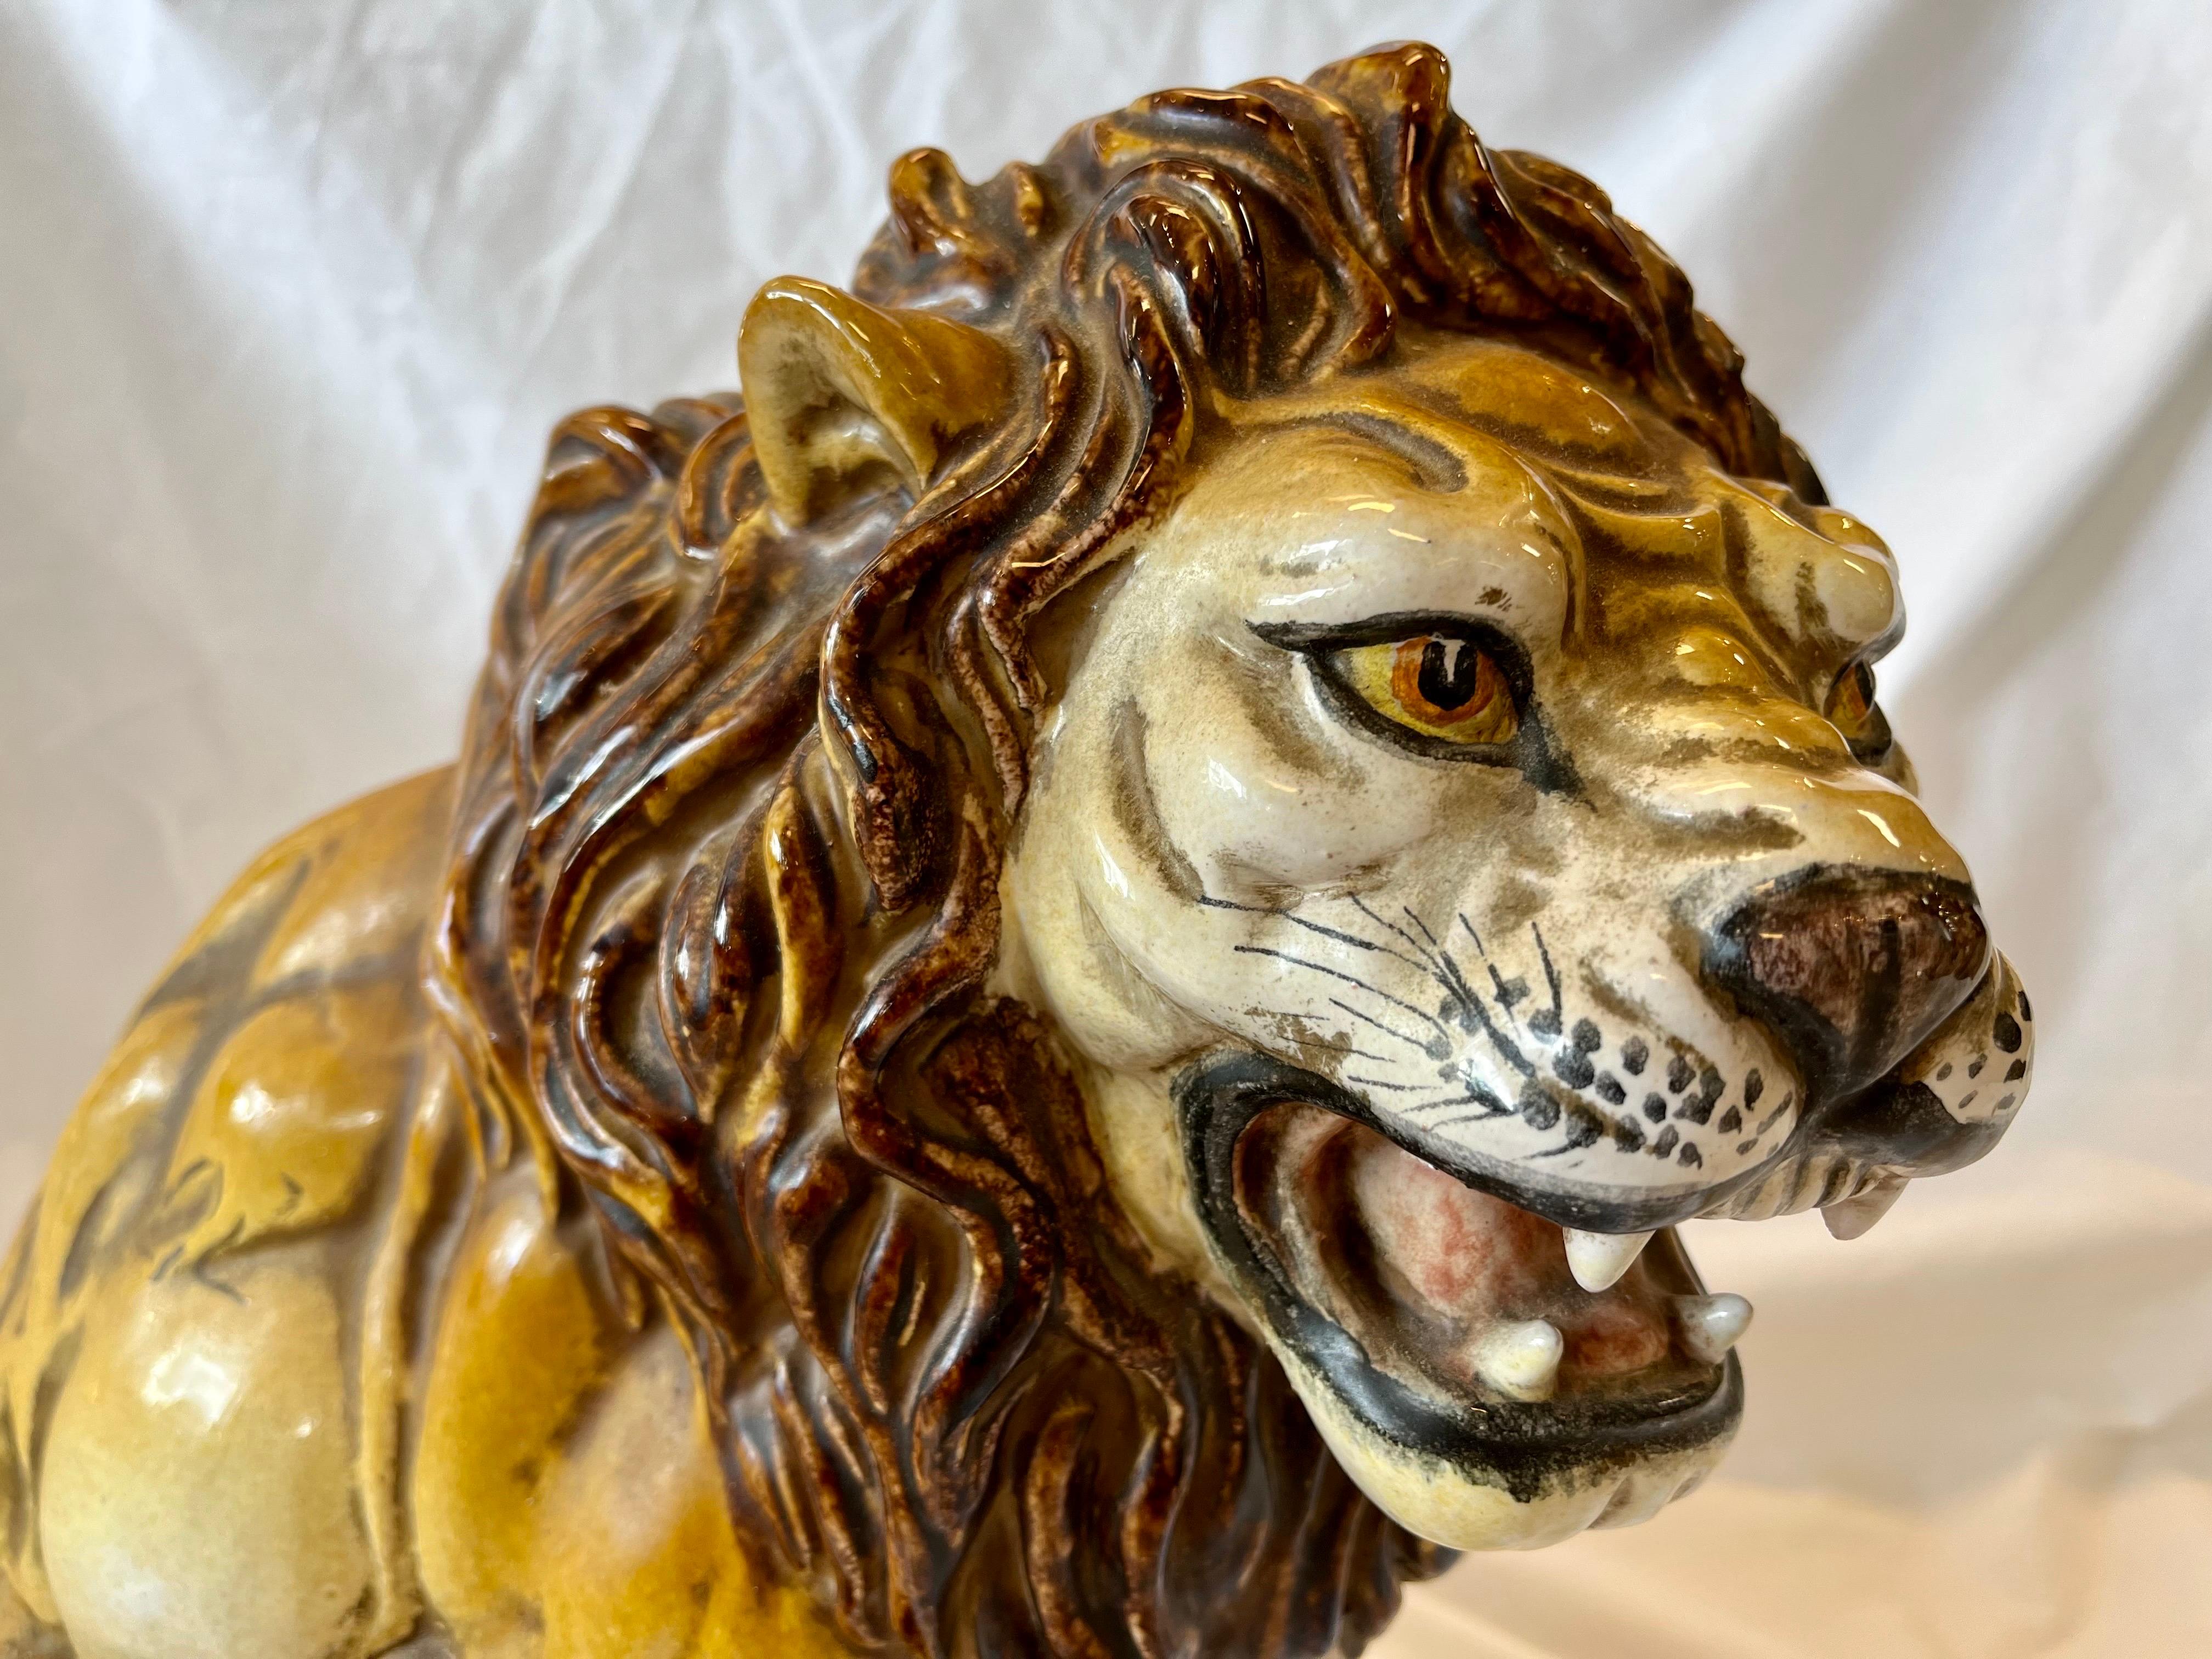 Italian Majolica Midcentury Terracotta Glazed Roaring Seated Lion Sculpture For Sale 6